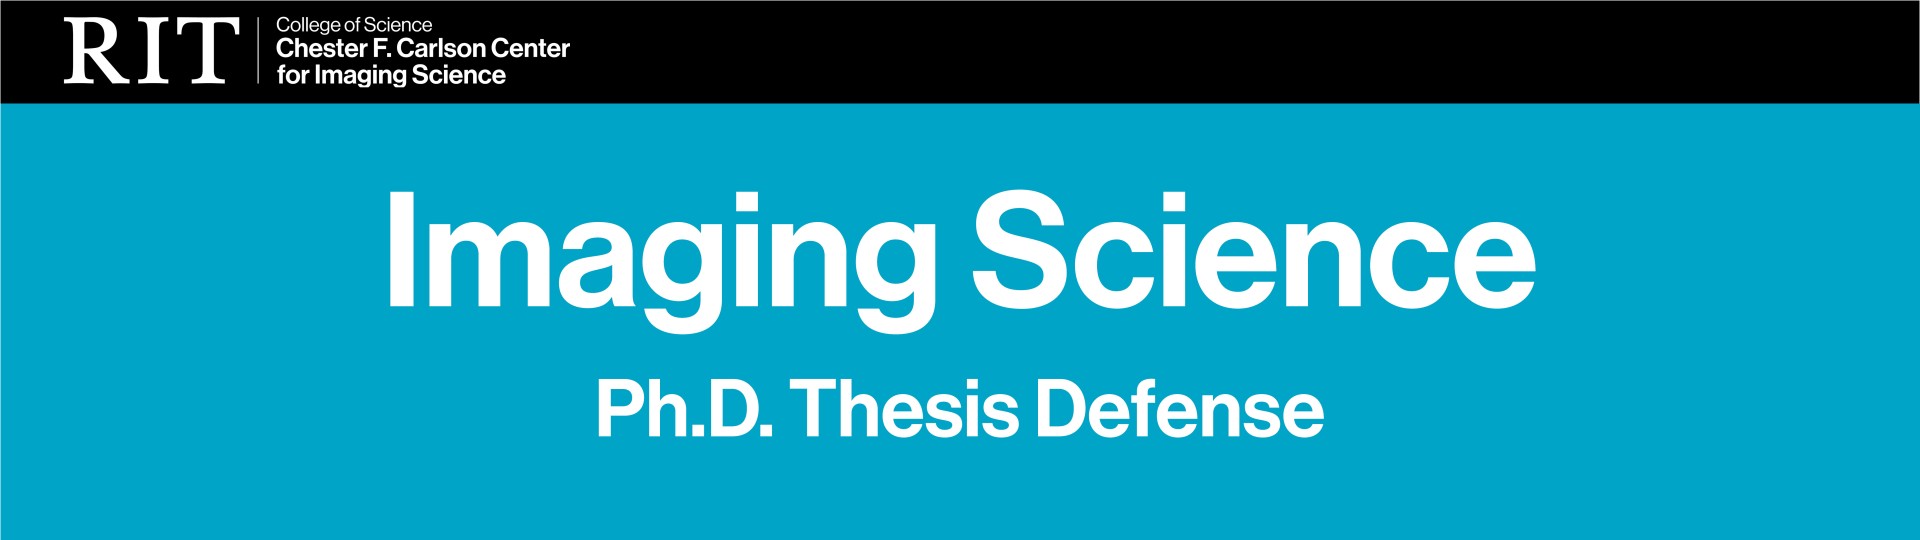 imaging science ph.d. banner